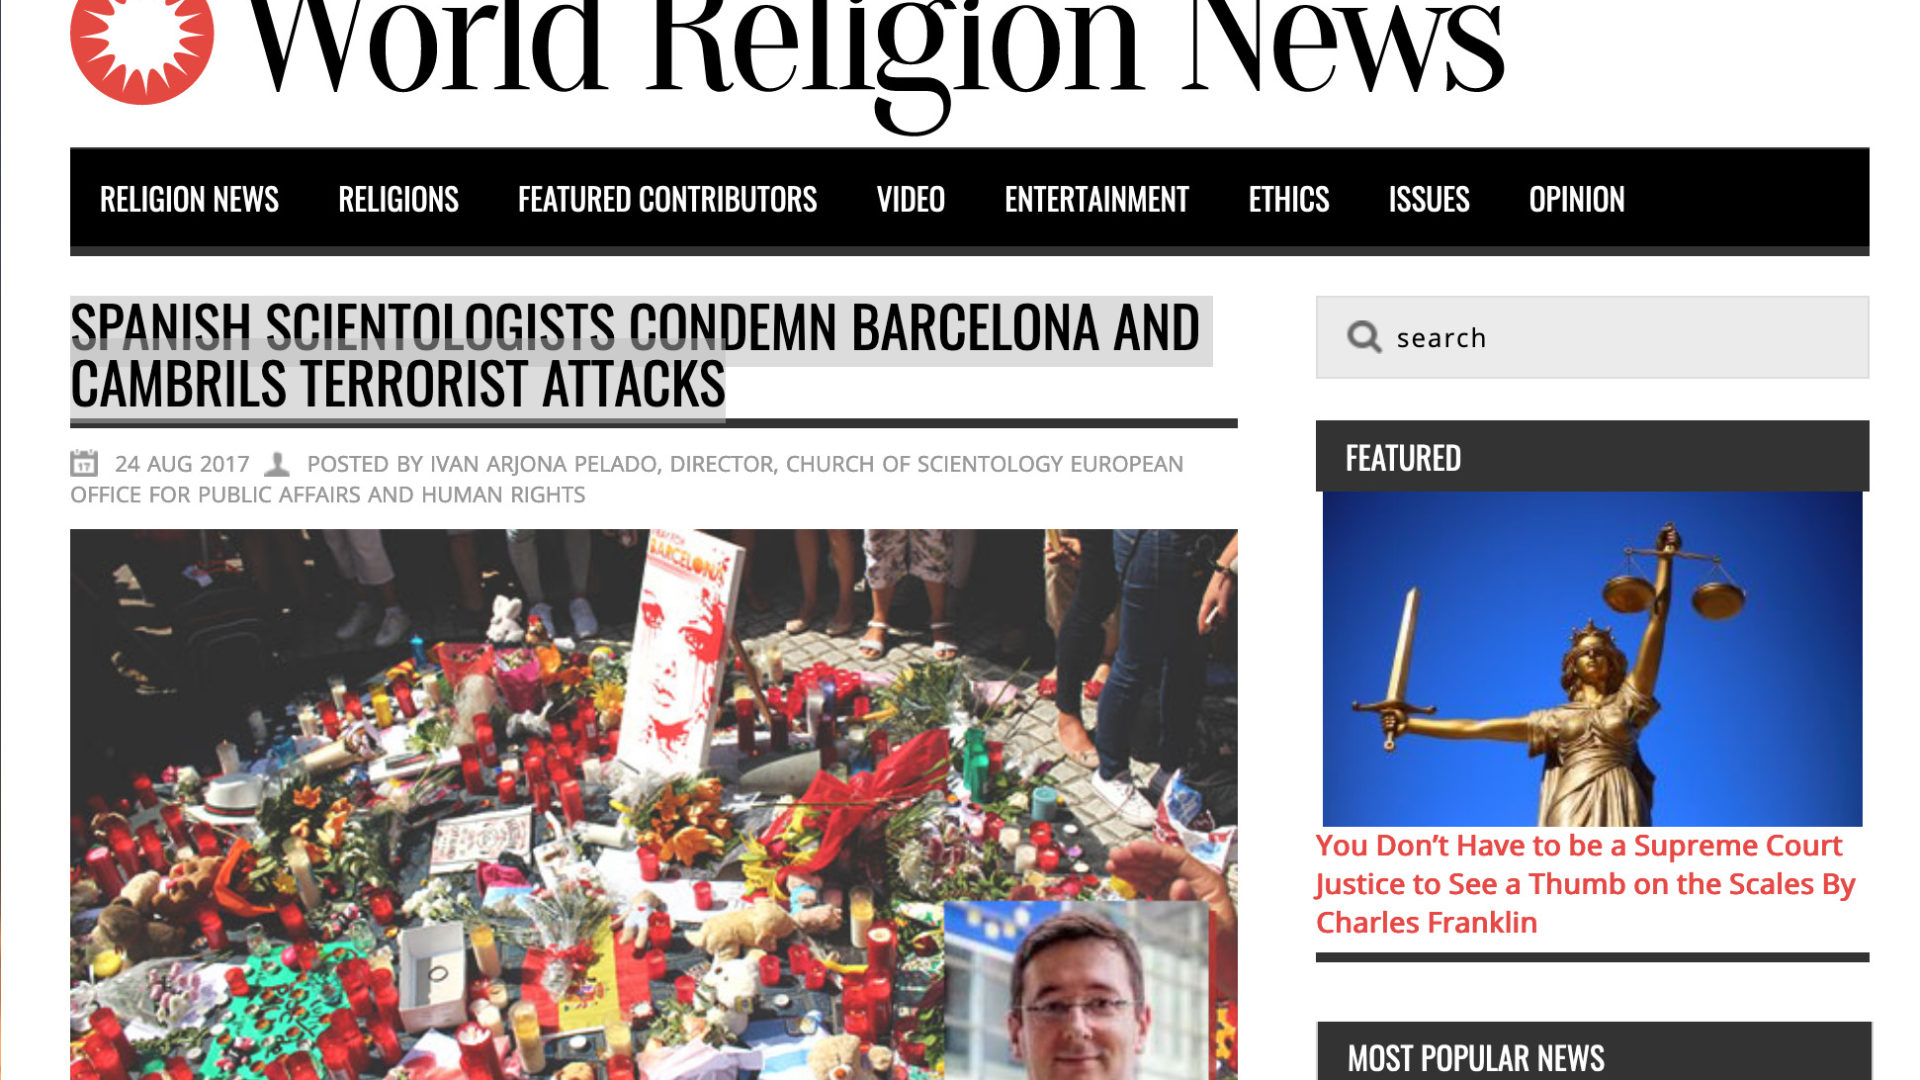 Spanish Scientologists Condemn Barcelona and Cambrils Terrorist Attacks - World Religion News